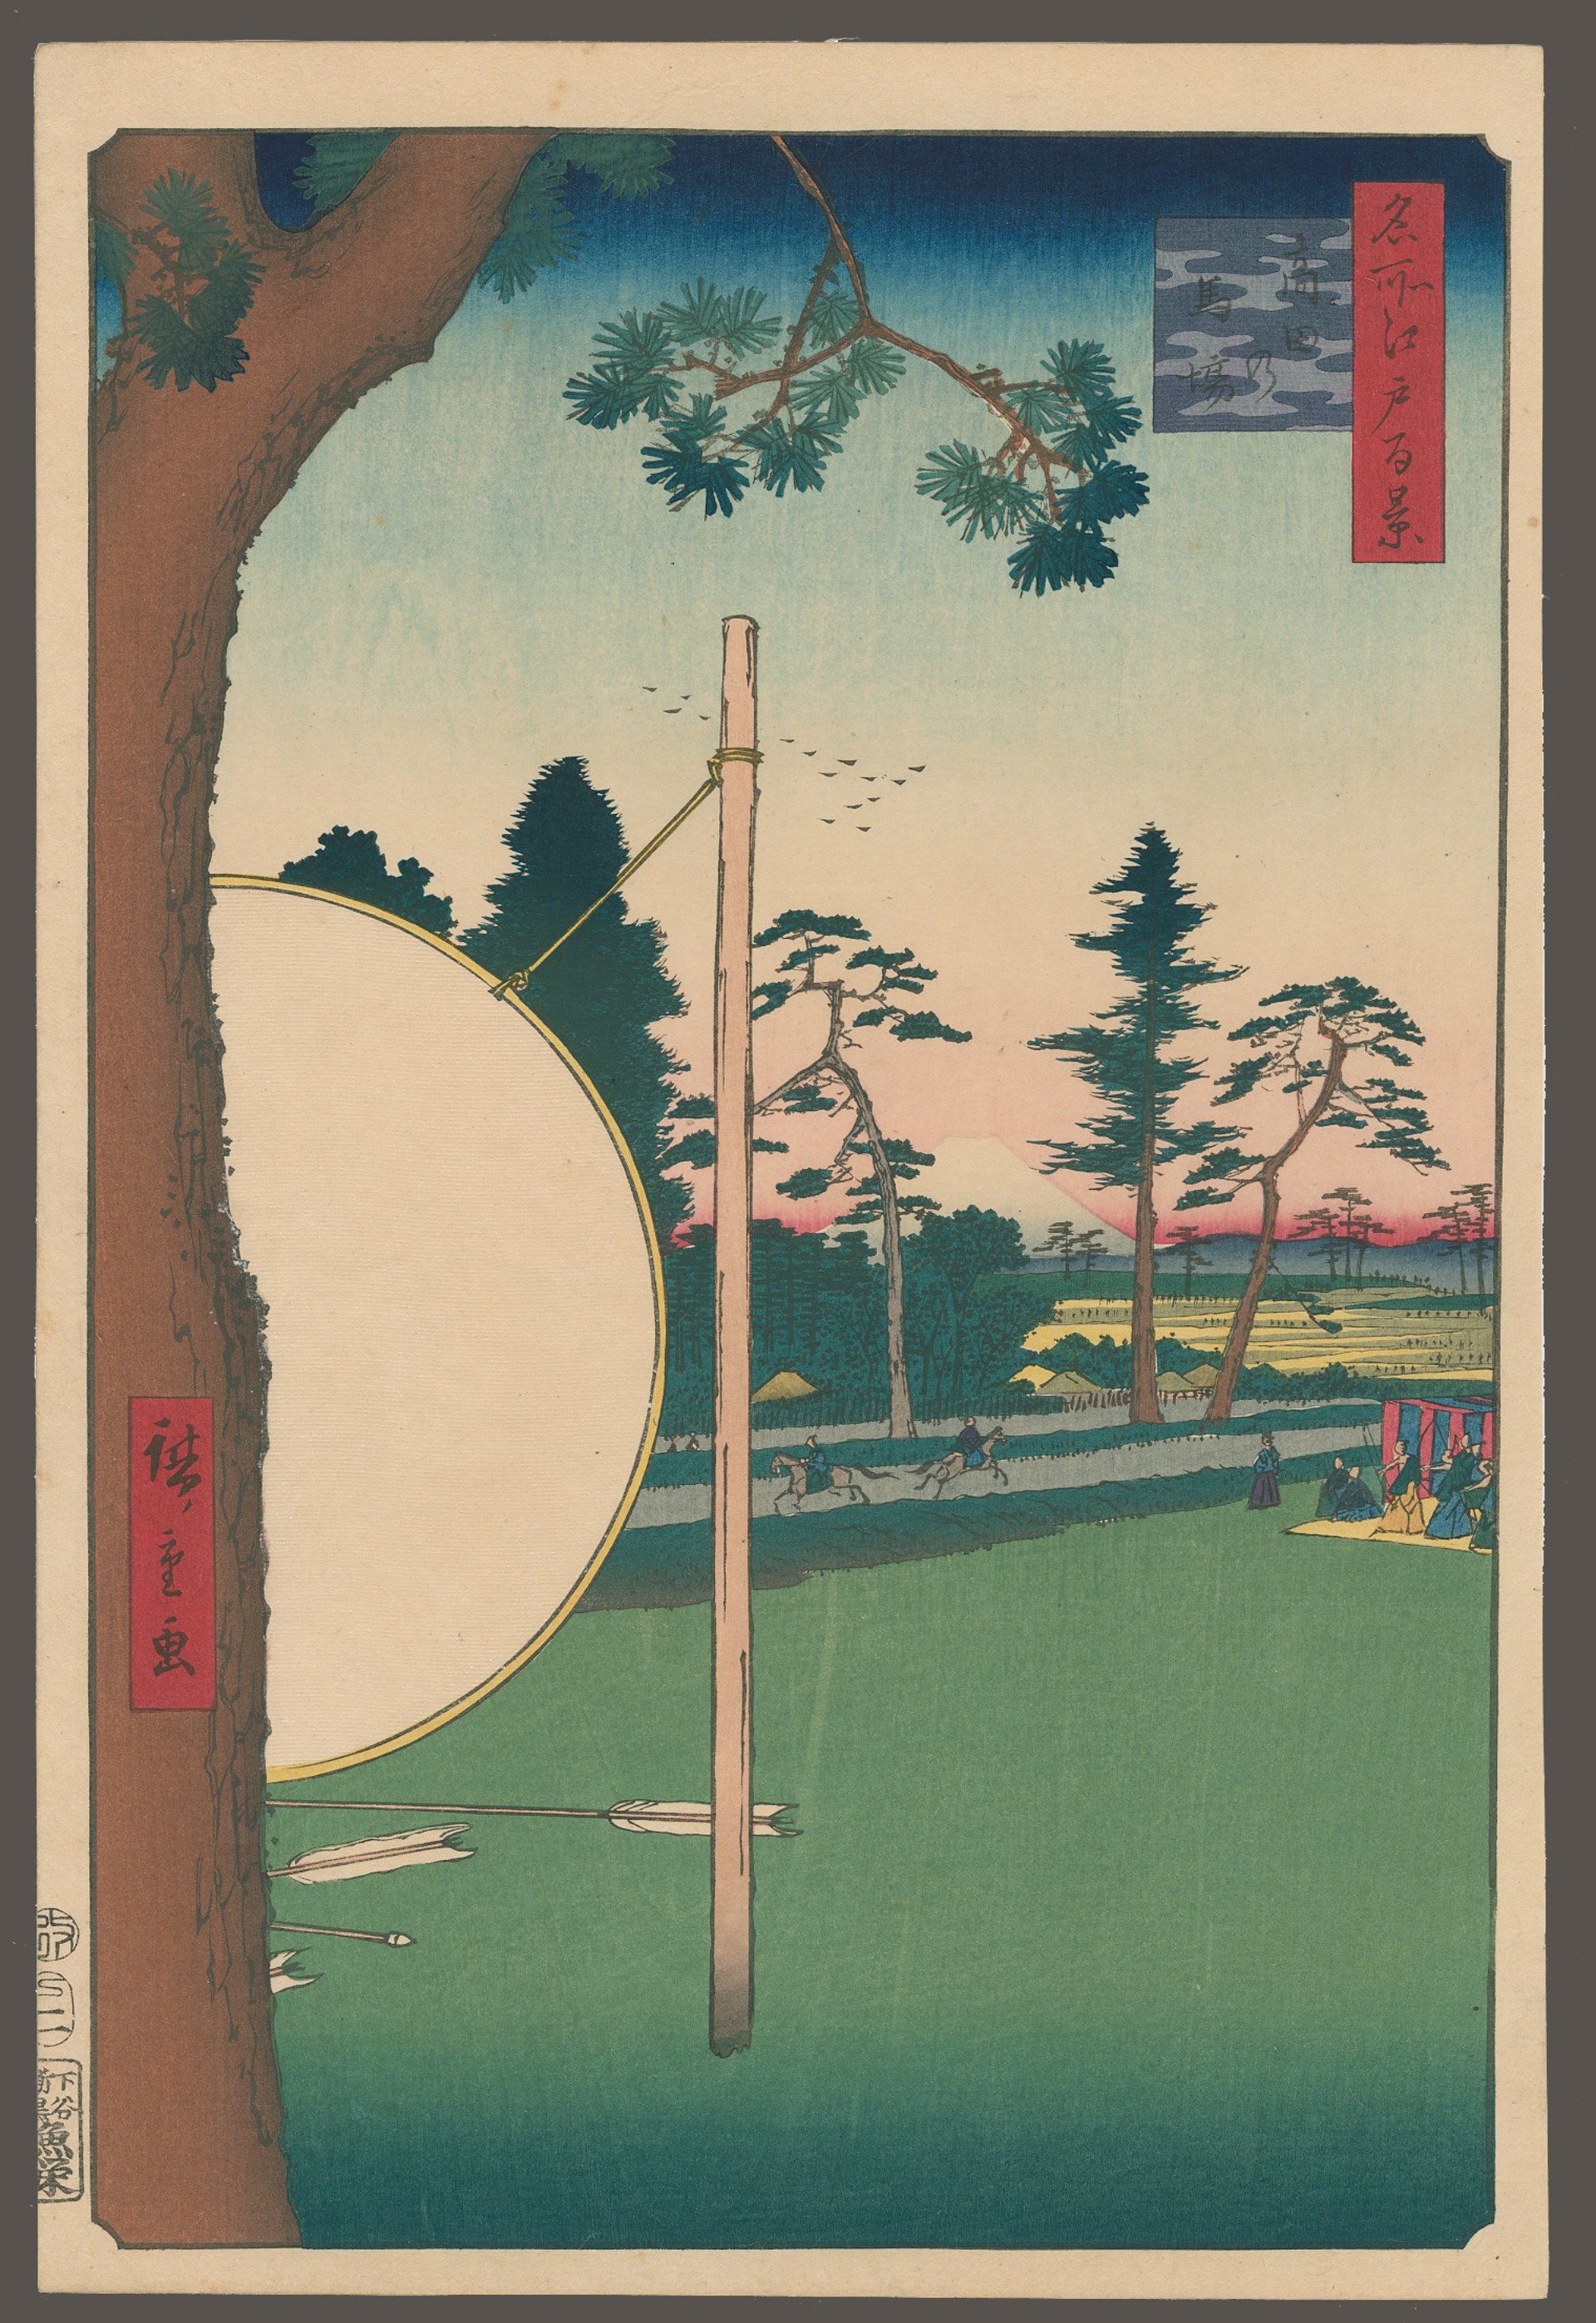 #115 Takada Riding Ground 100 Views of Edo by Hiroshige